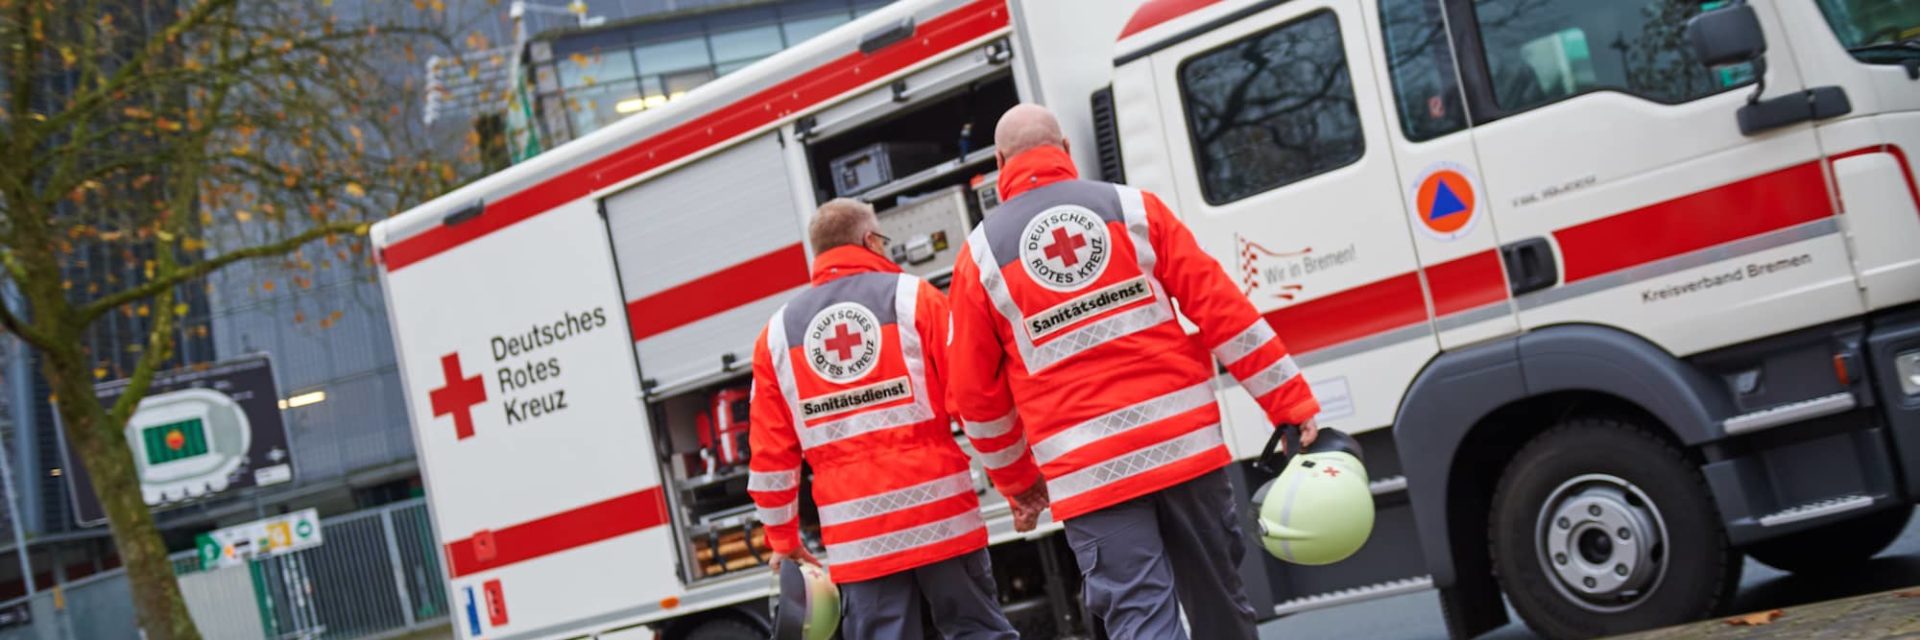 Deutsches rotes Kreuz Bremen Katastrophenschutz